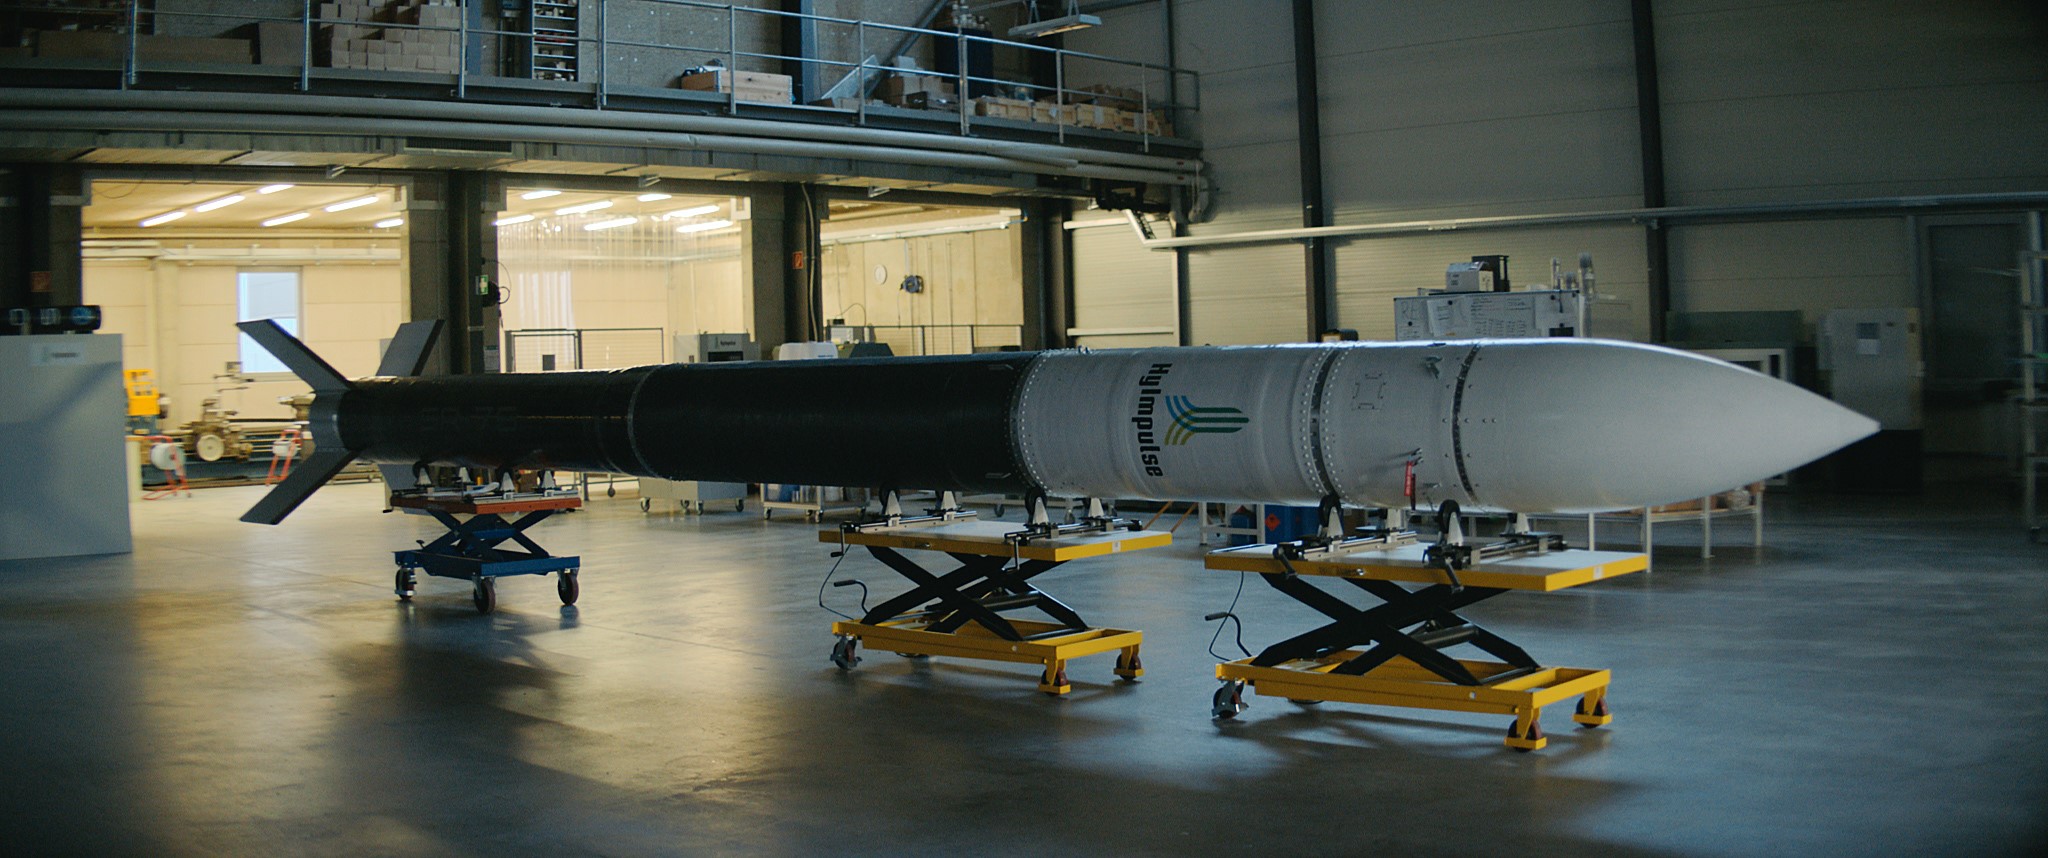 German rocket set for launch in South Australia